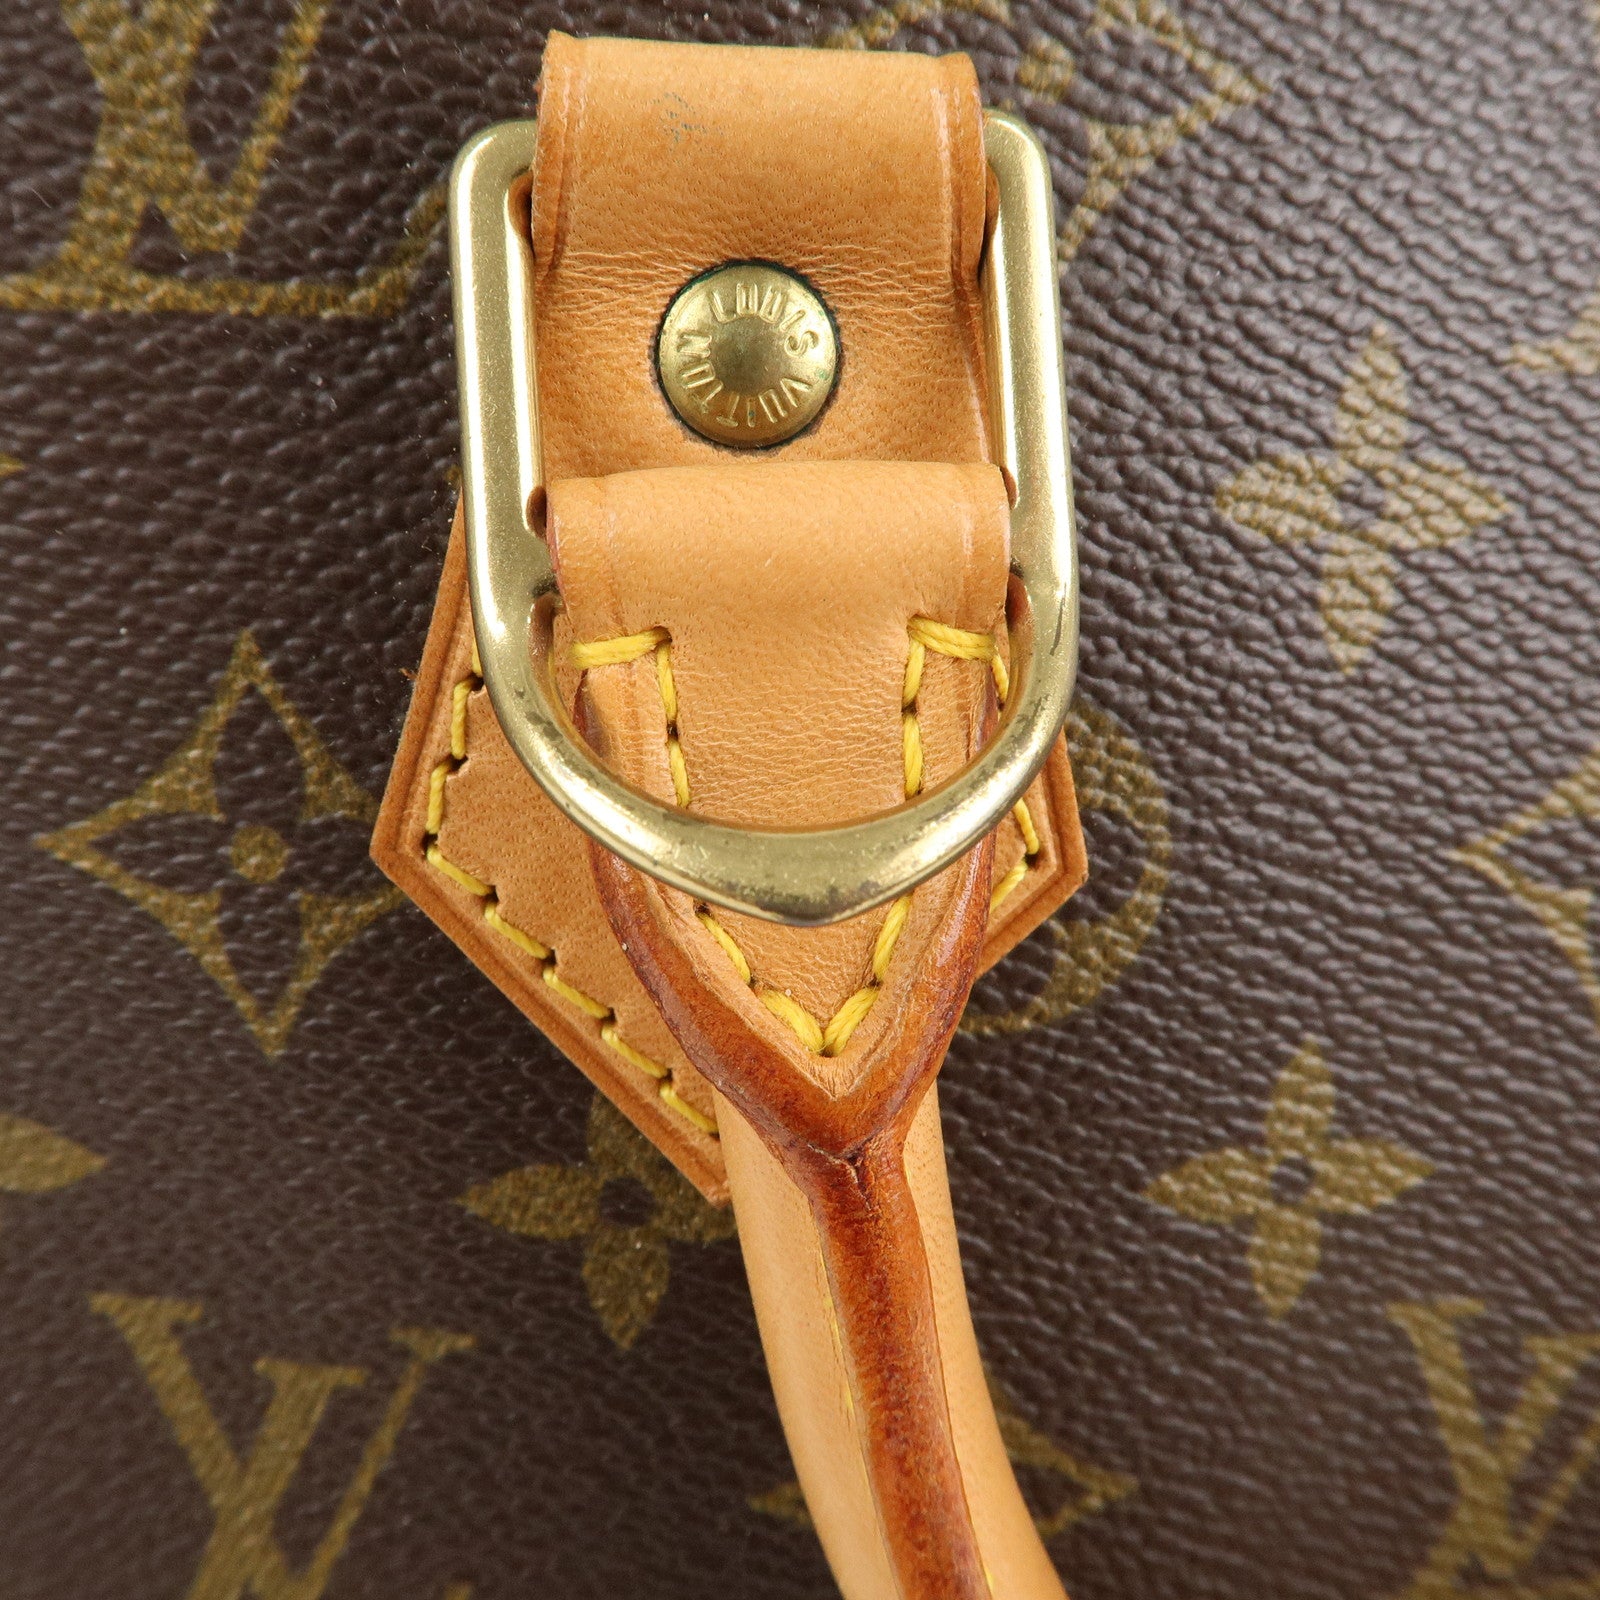 Louis Vuitton Alma M51130 Brown Monogram Hand Bag 11550